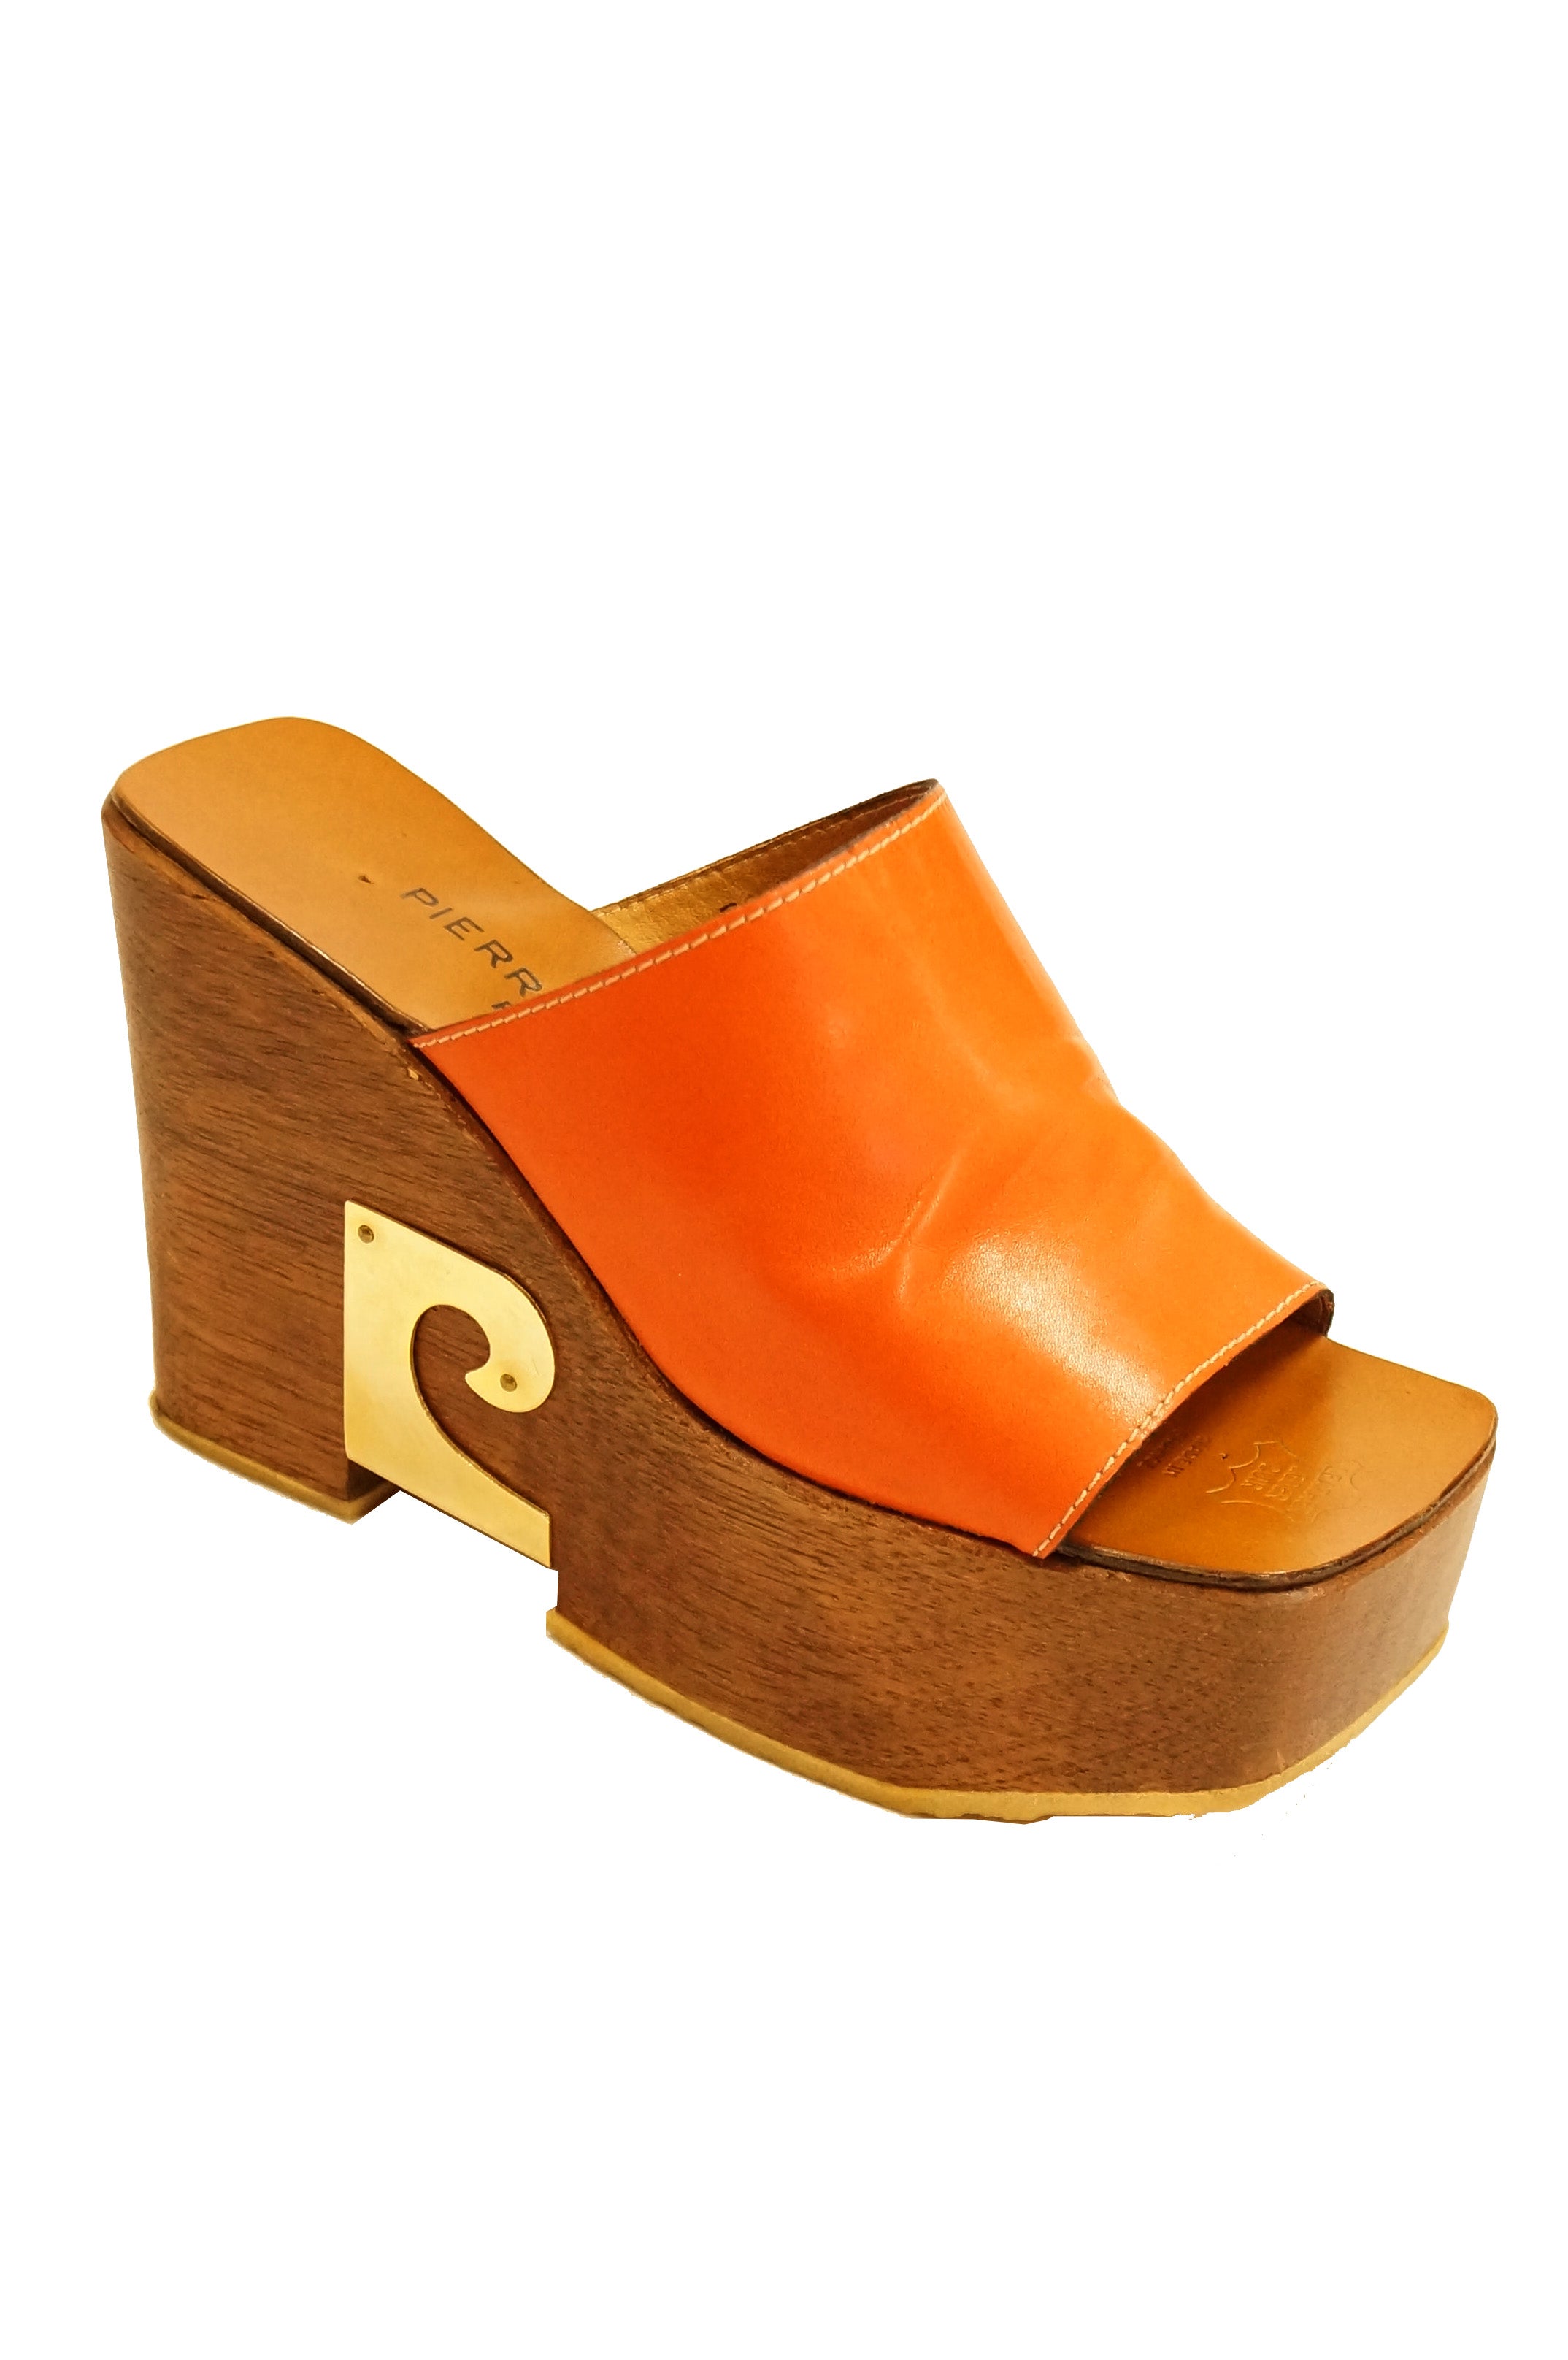 1970s Pierre Cardin Orange Leather and Wood Platform Mules, Iconic ...